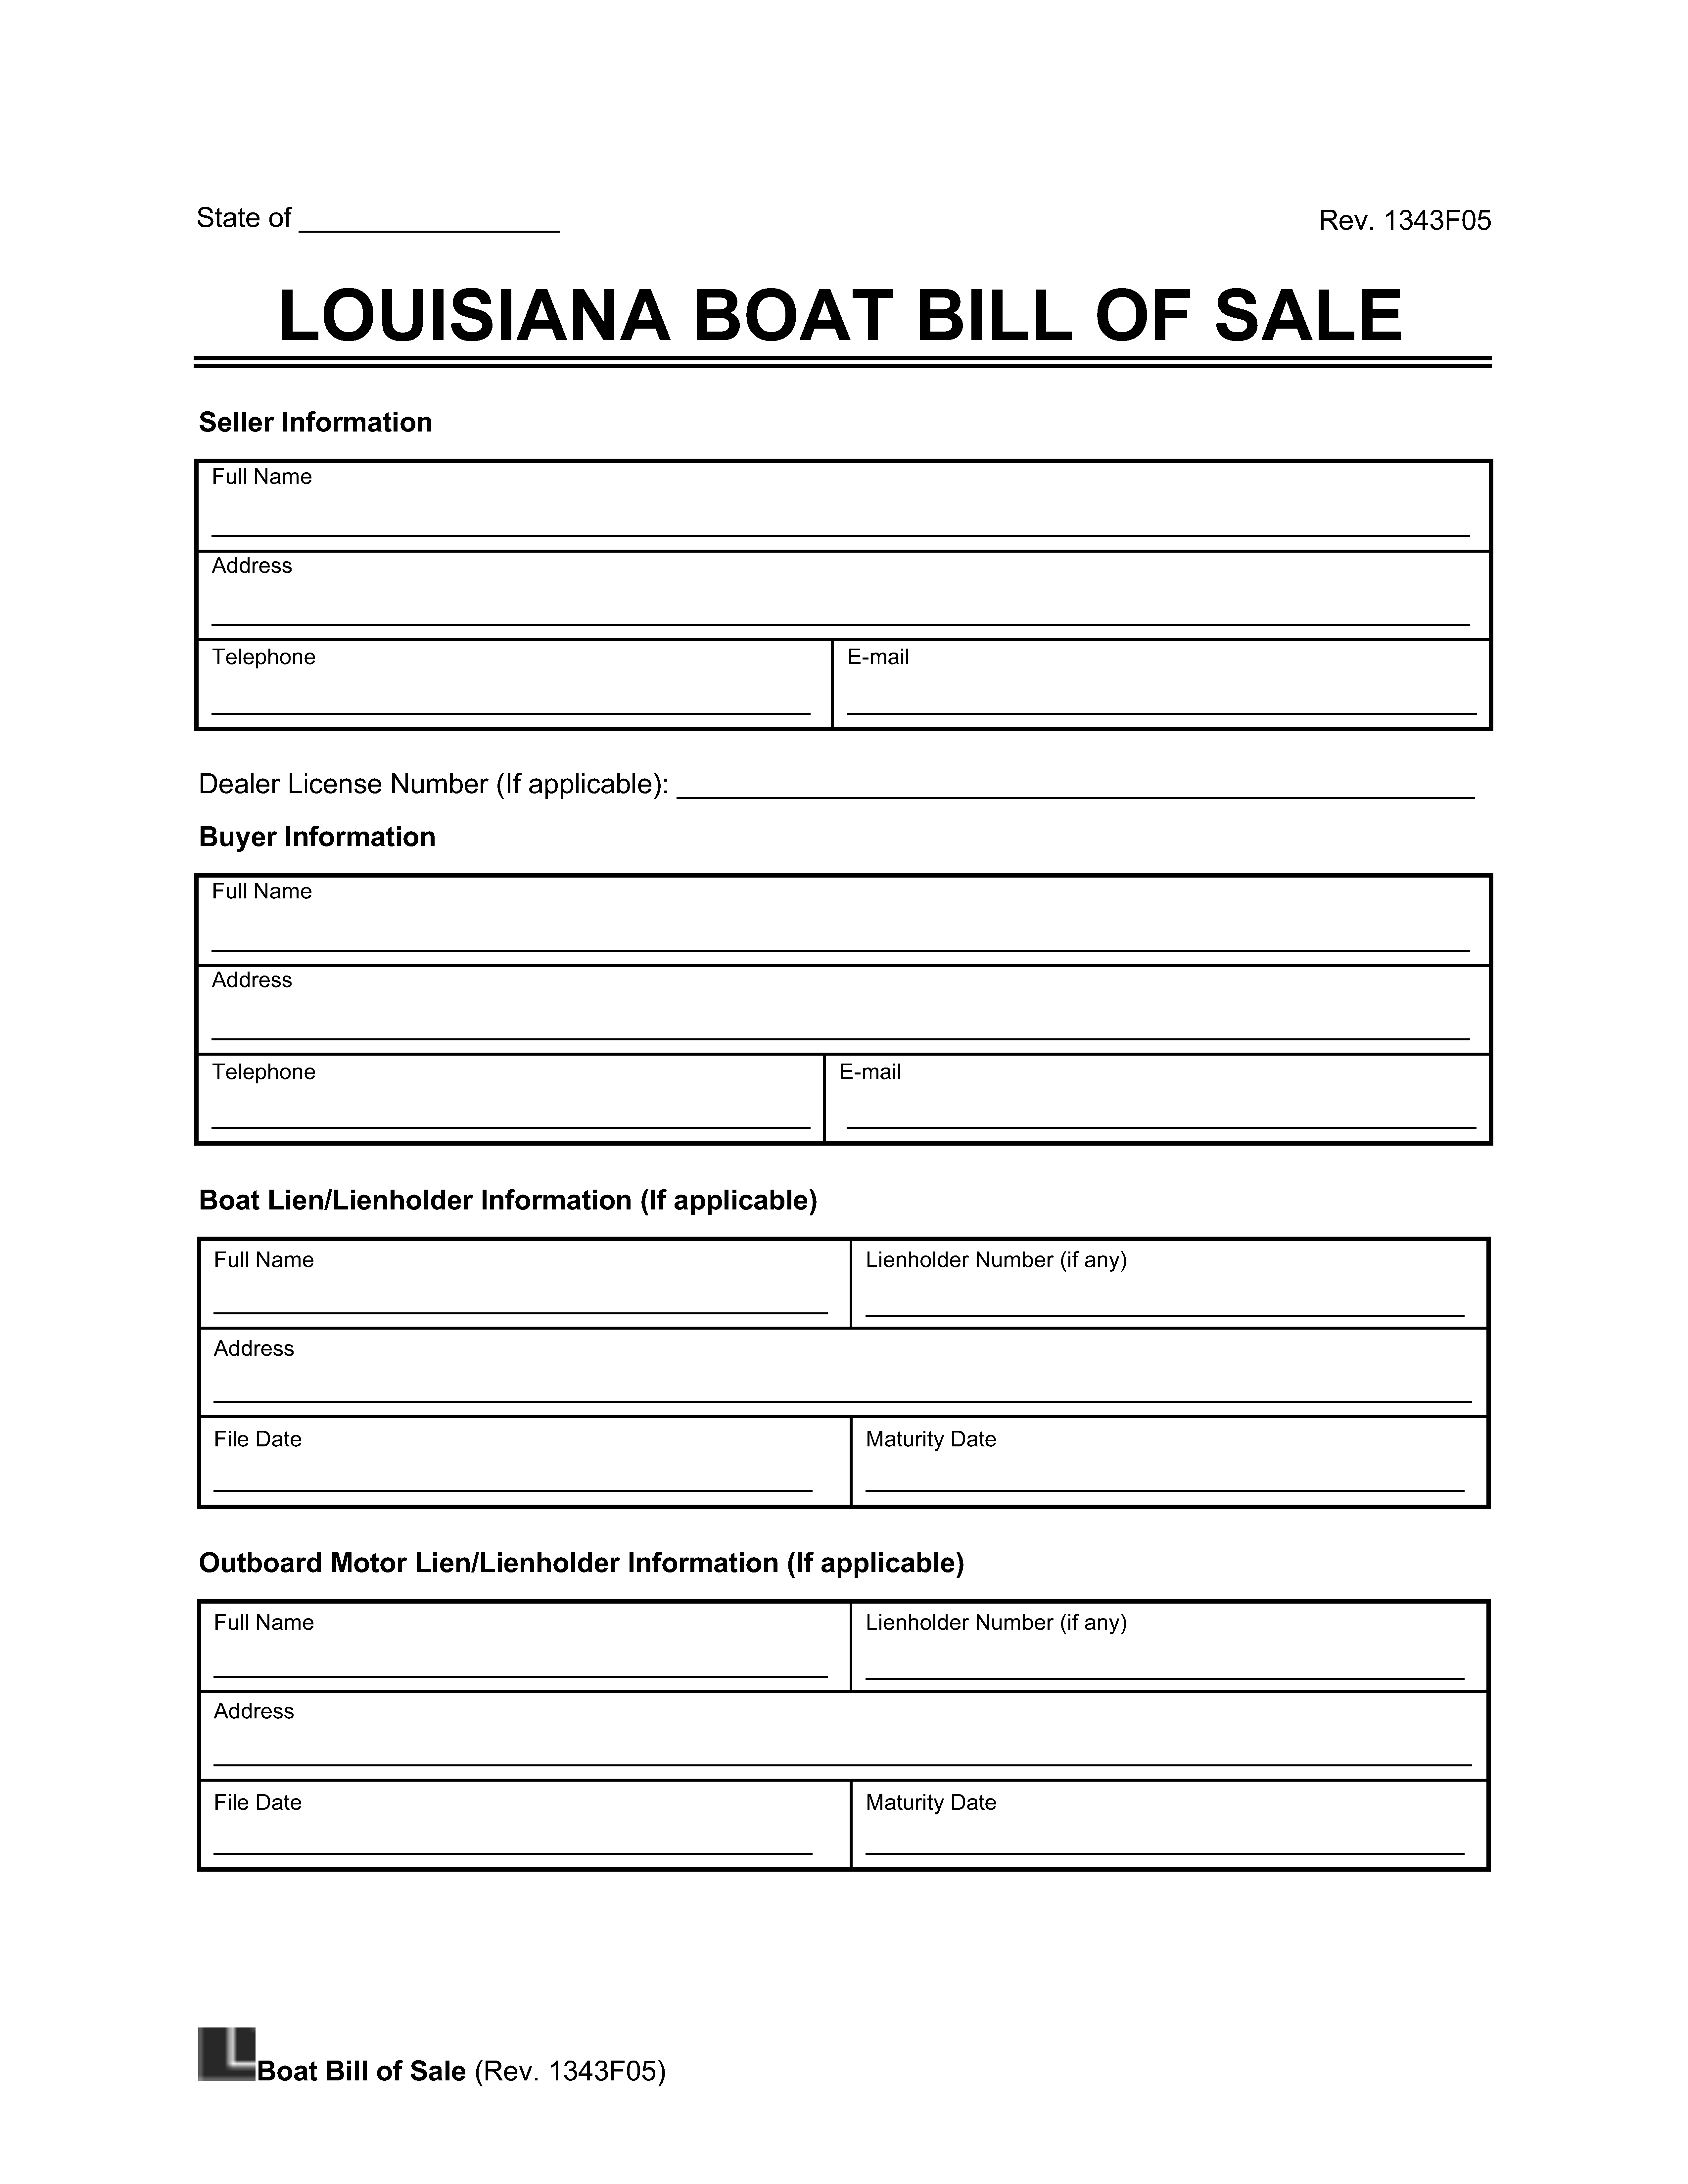 Boat Bill of Sale Louisiana screenshot